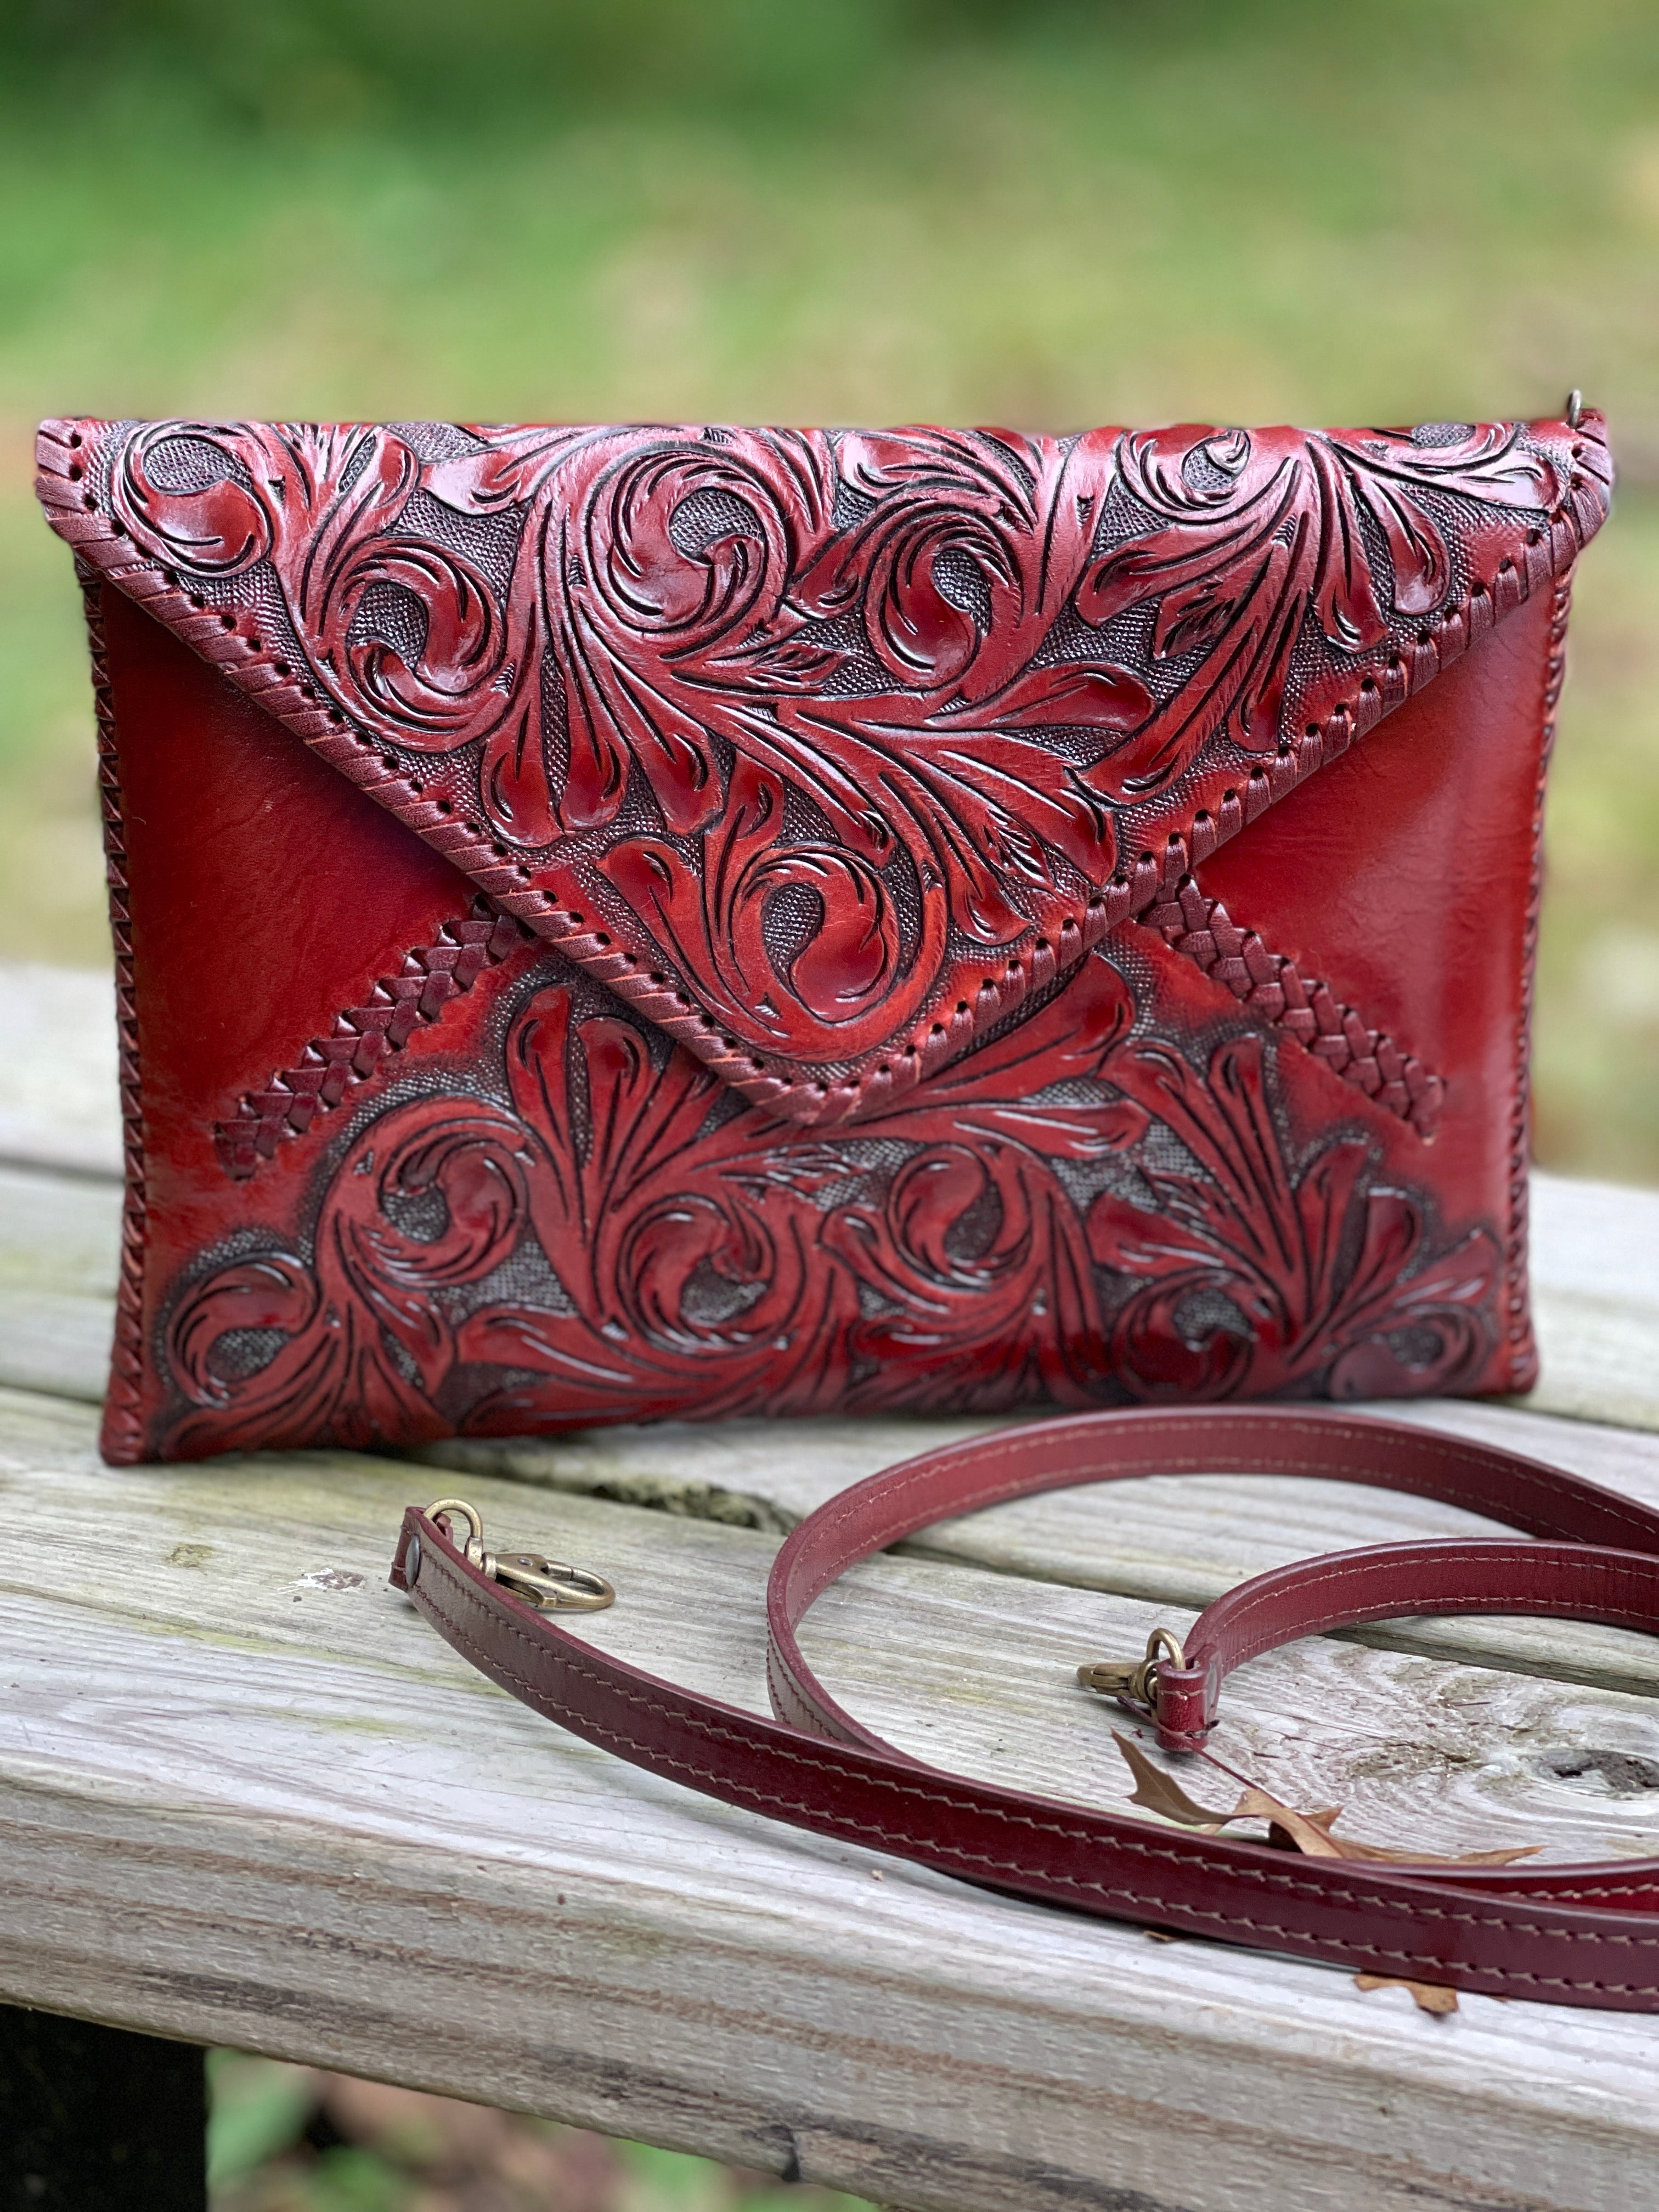 Dooney and Bourke black leather purse, red interior | eBay